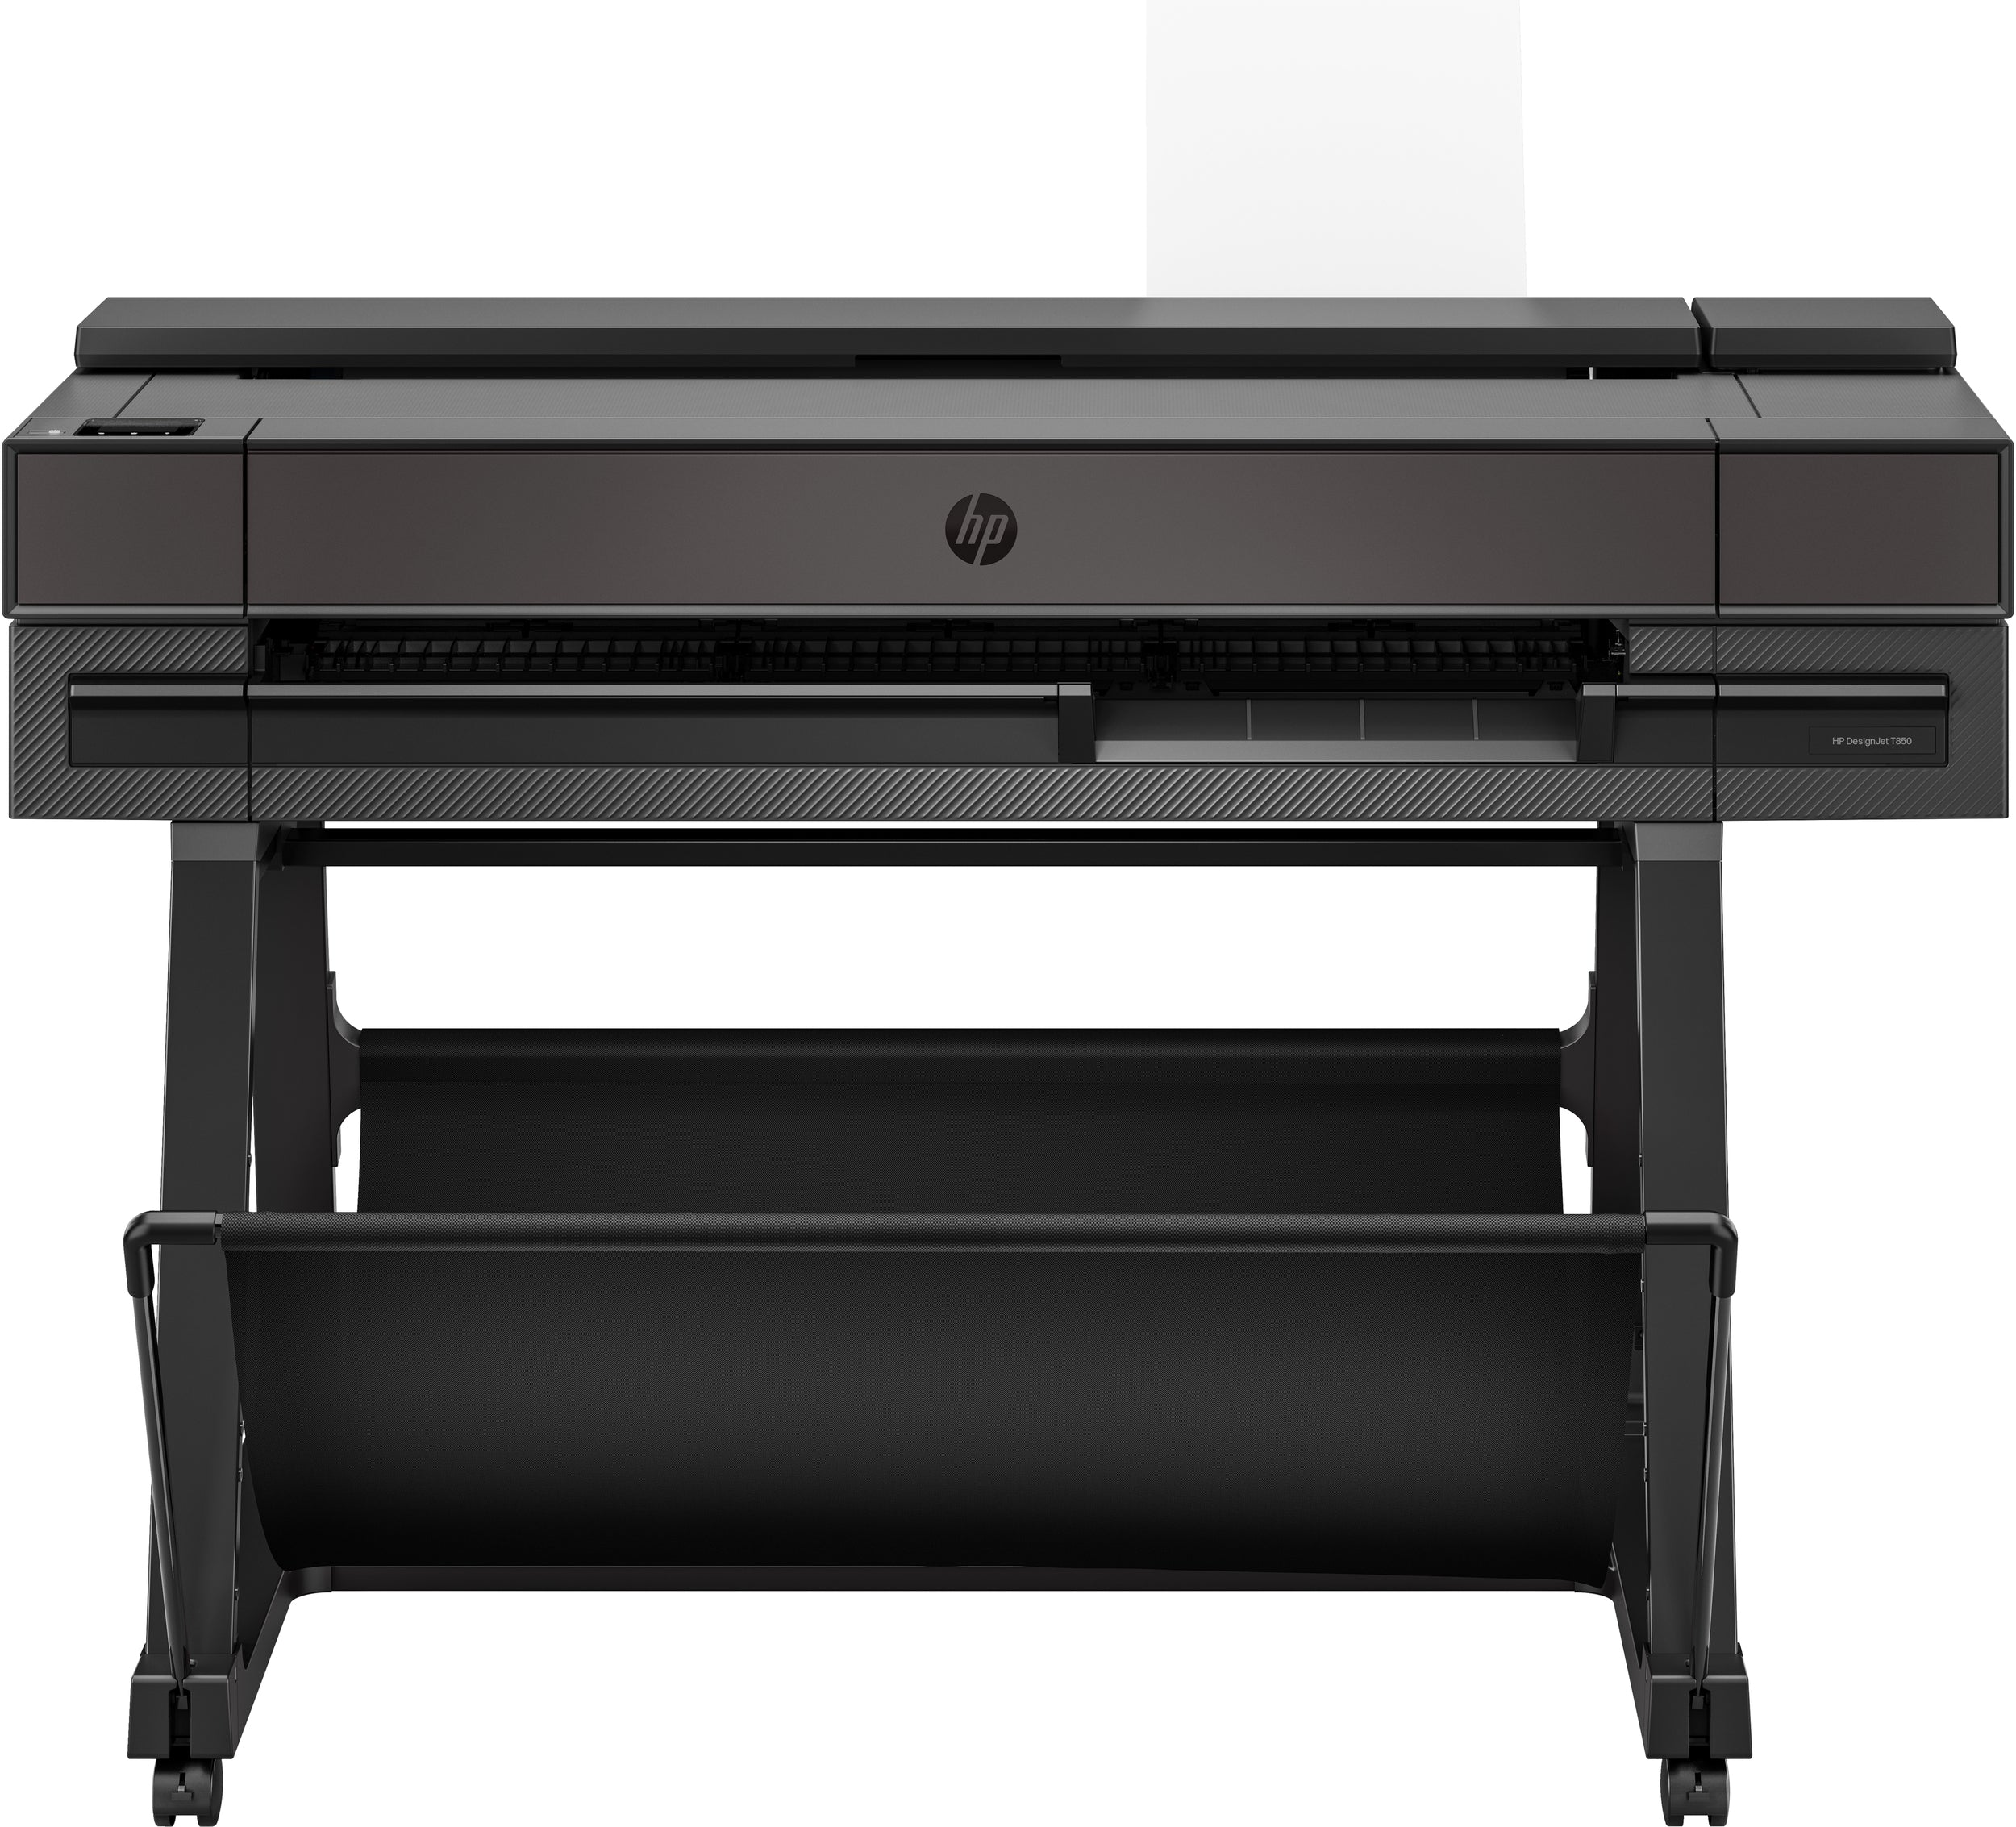 Plotter Hp Designjet T850 Impresora, 36 Pulgadas, 91 Cm, 4 Tintas, Red, Wifi,  2Y9H0A